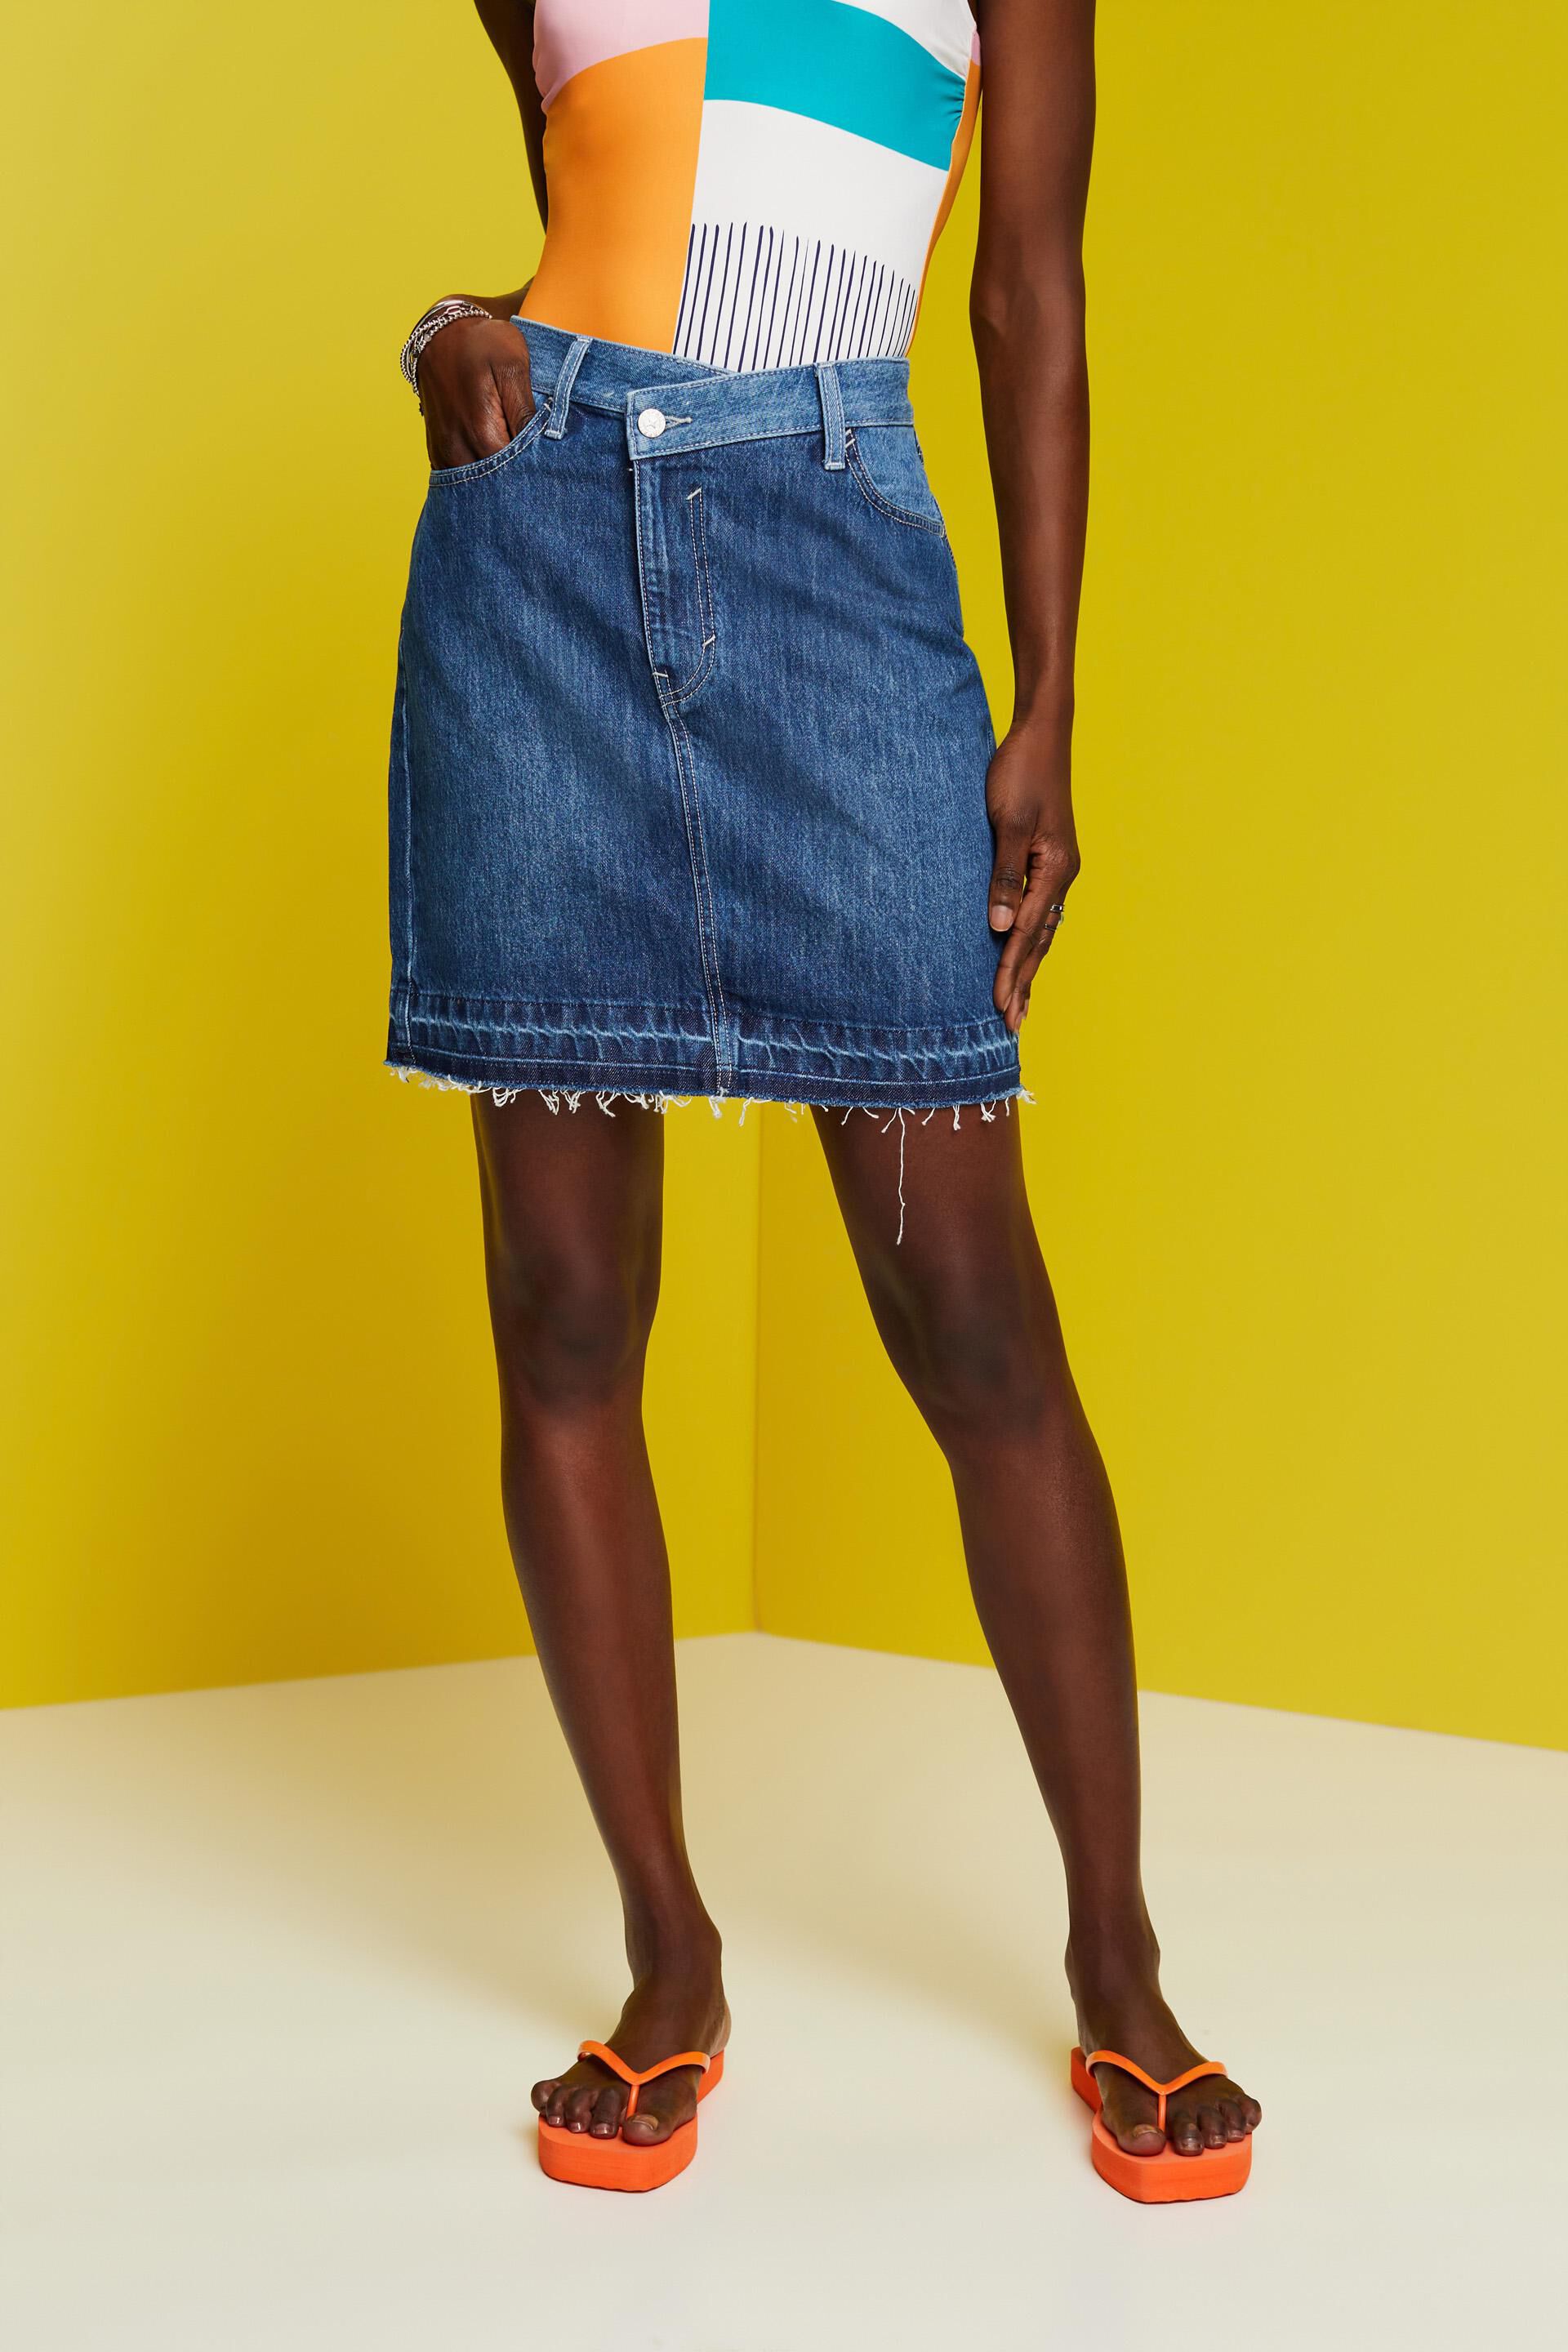 Esprit asymmetric with skirt Jeans hem mini an